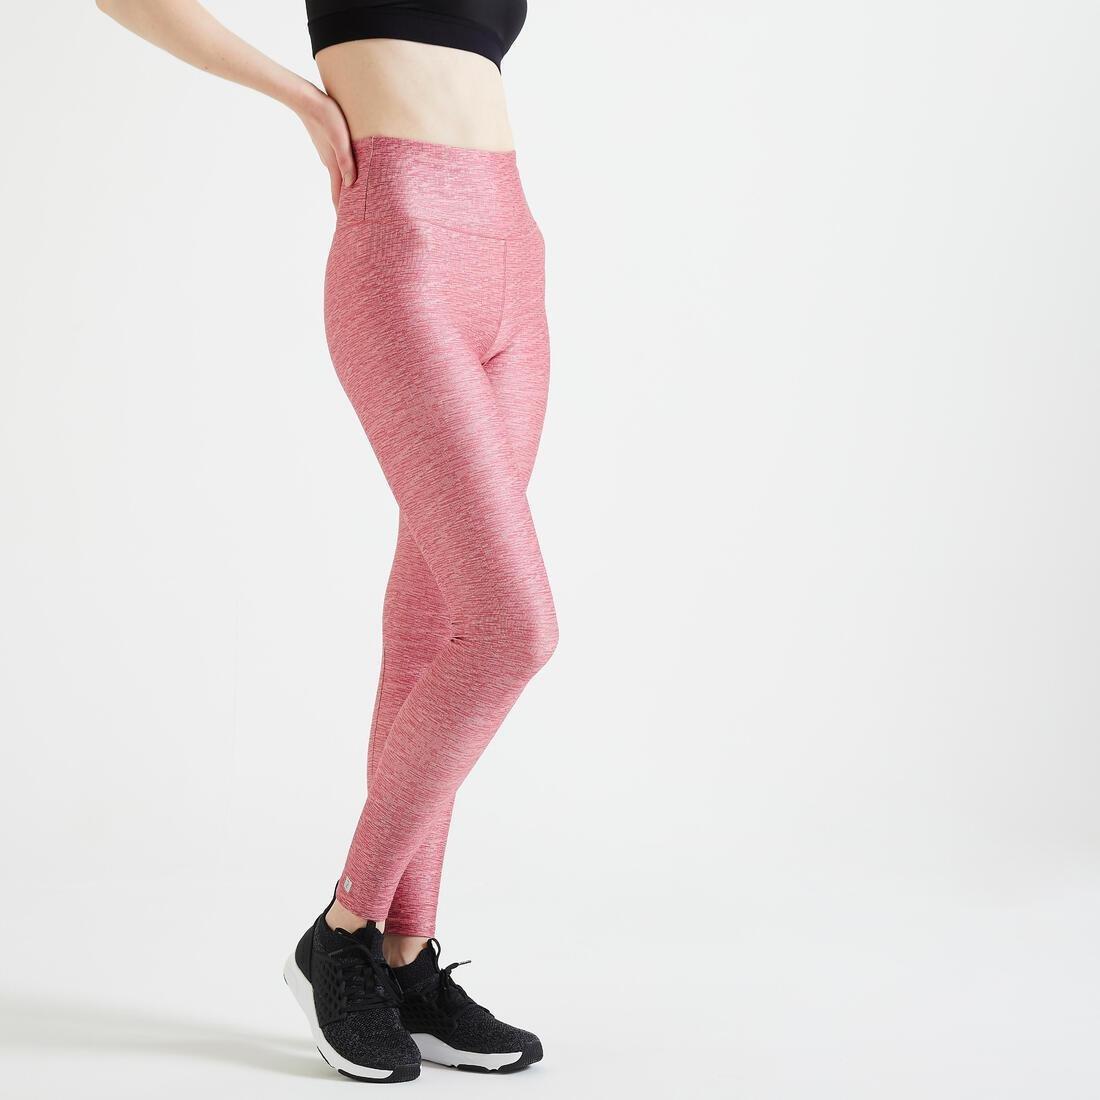 DOMYOS Women High-Waisted Cardio Fitness Leggings, Pink